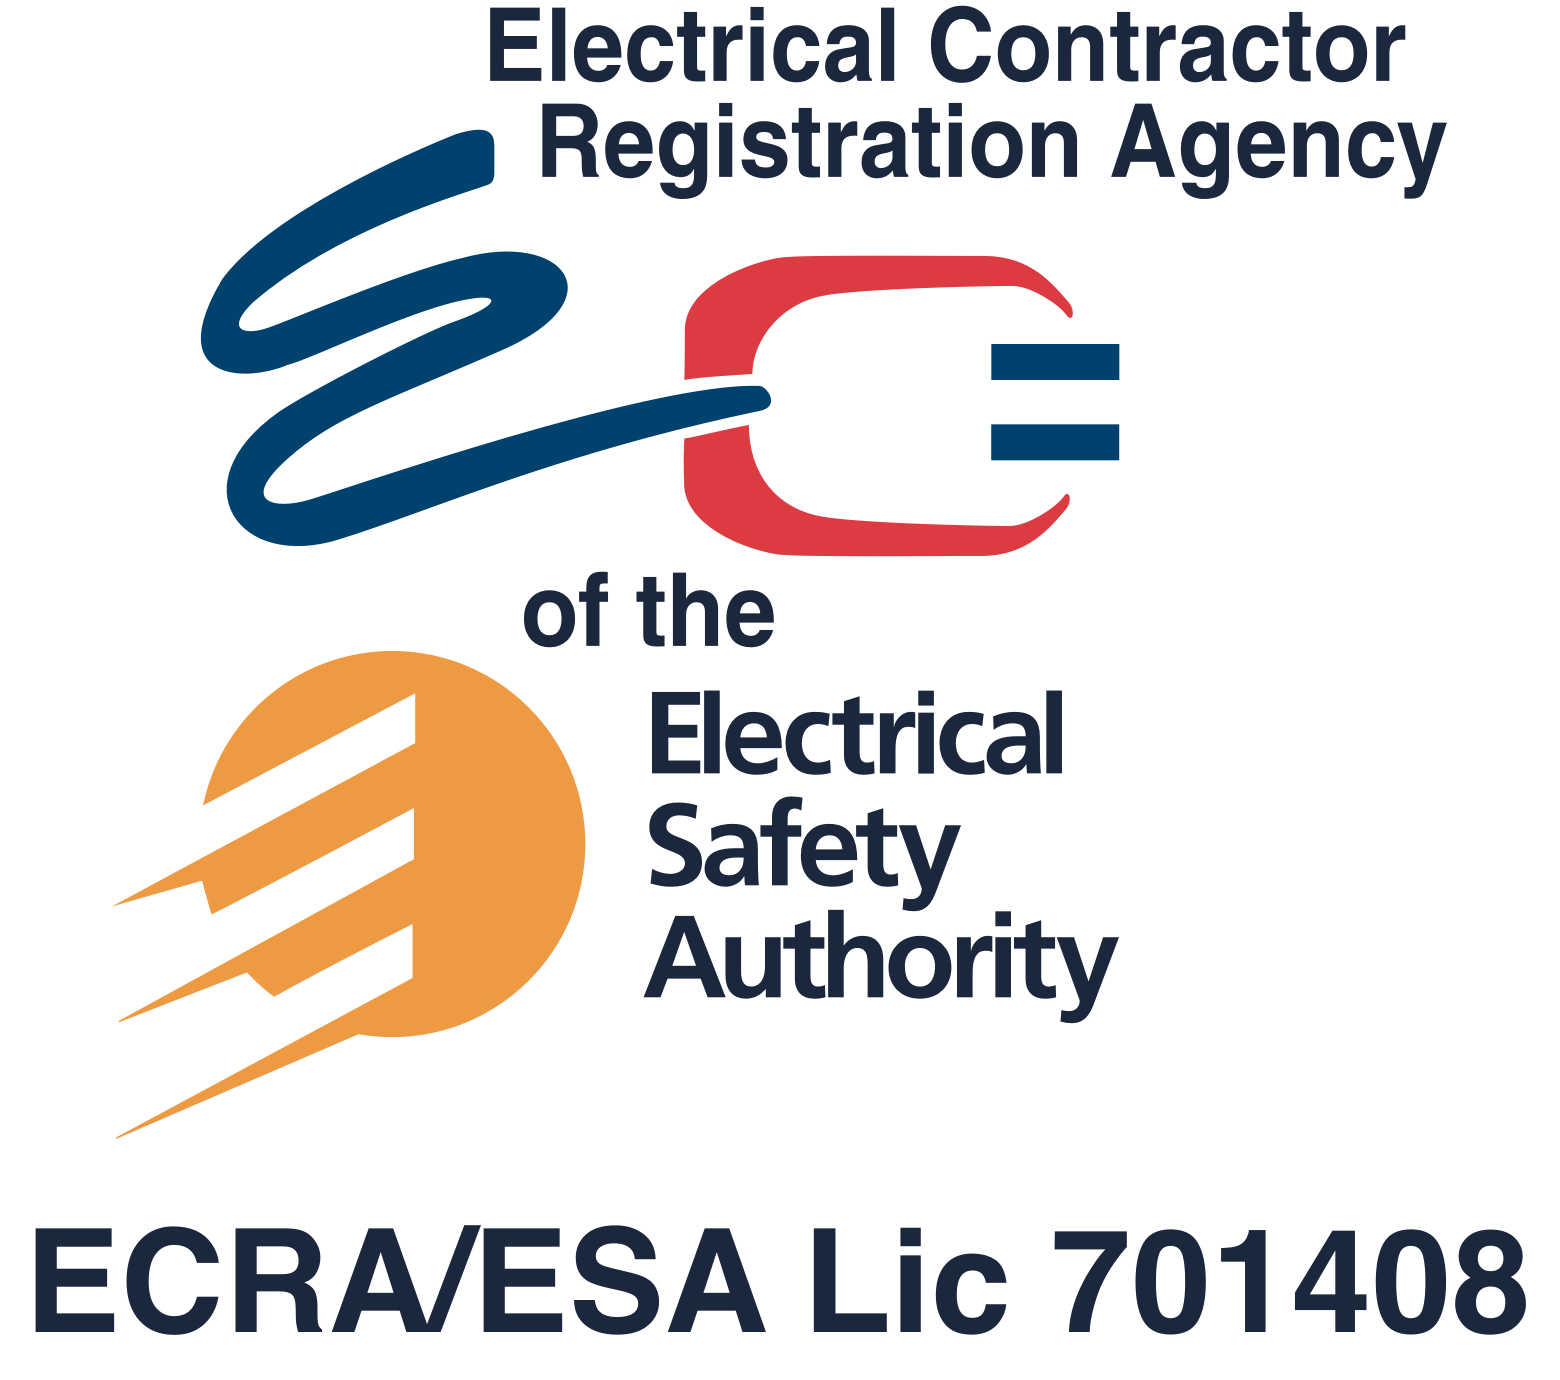 ECRA/ESA licence number